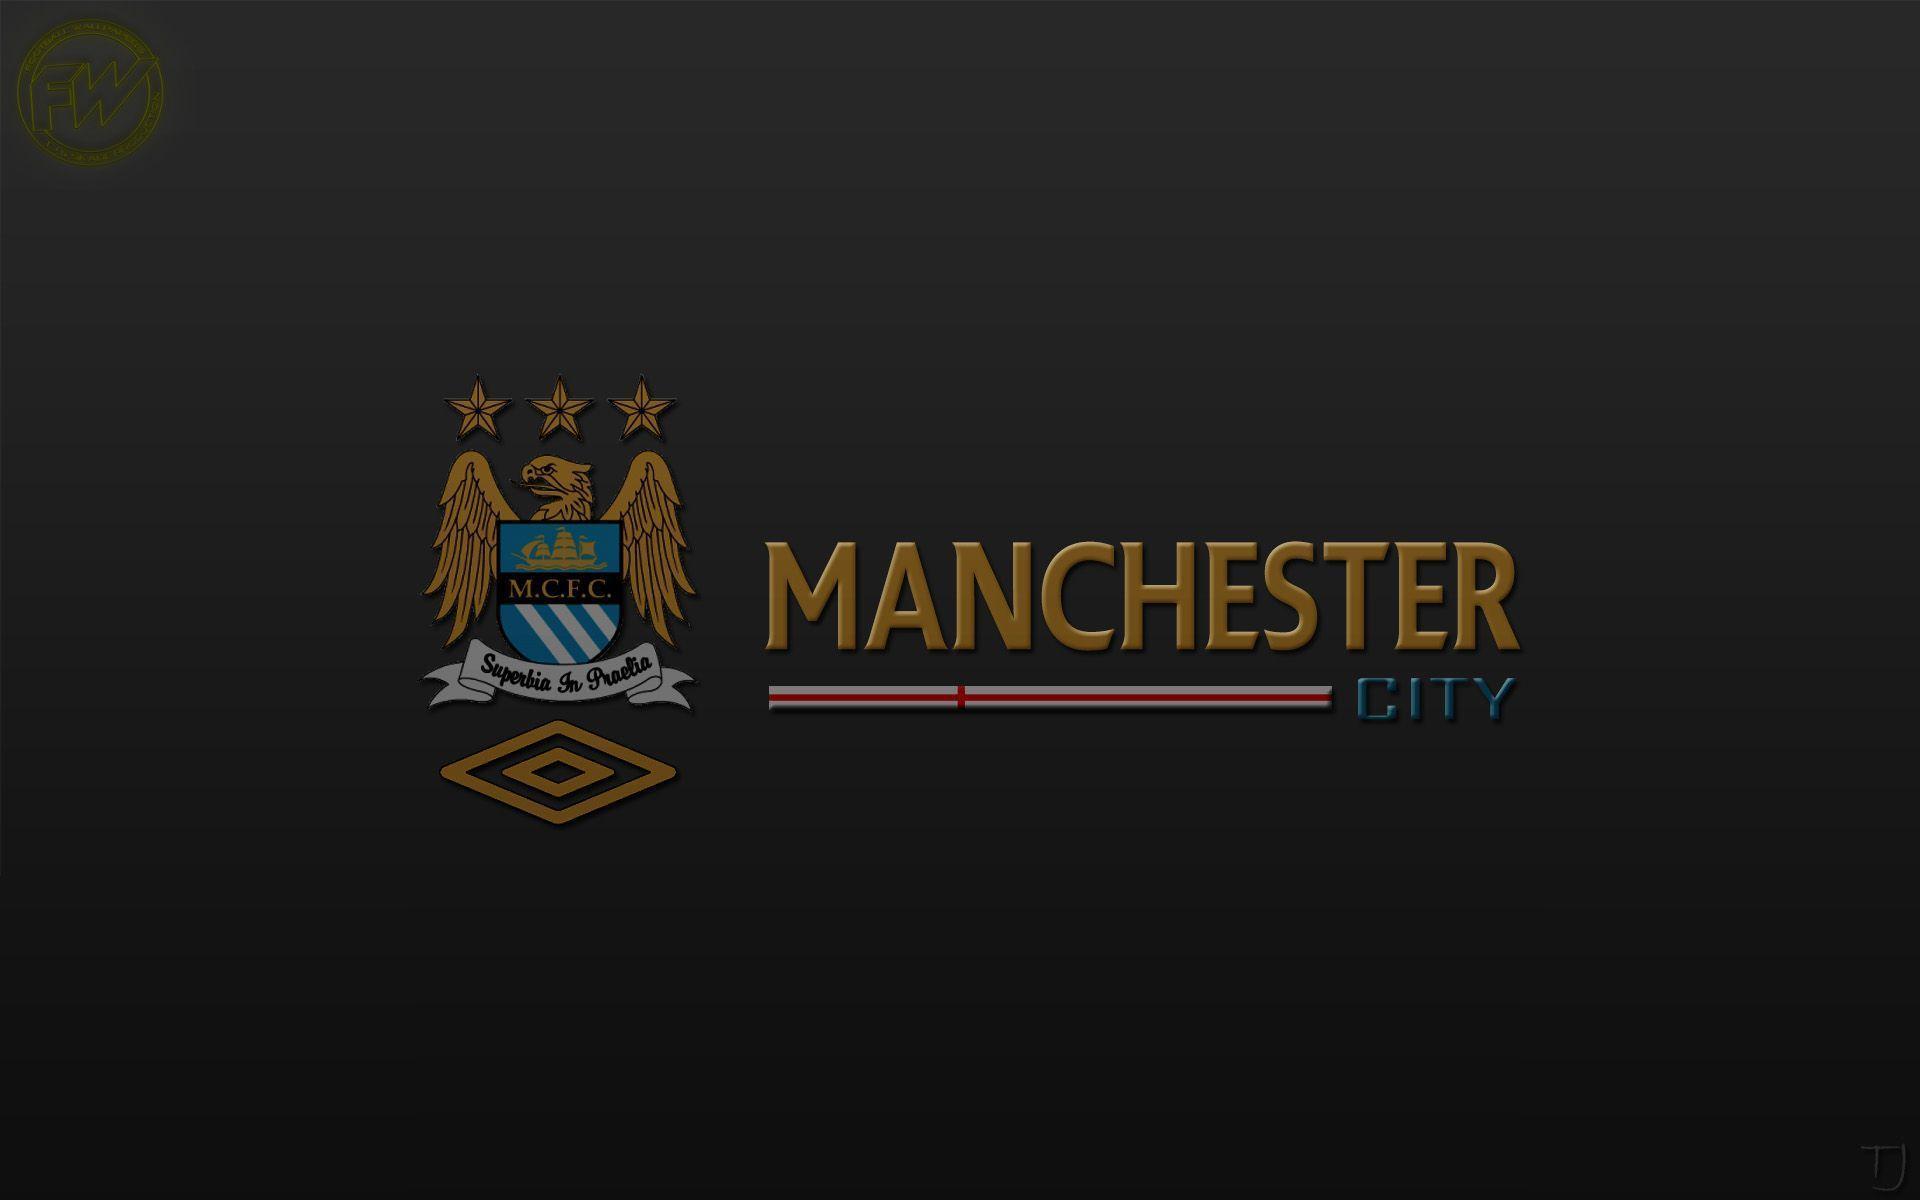 Download Foto Wallpaper Klub Manchester City 2015 2016 Terbaru